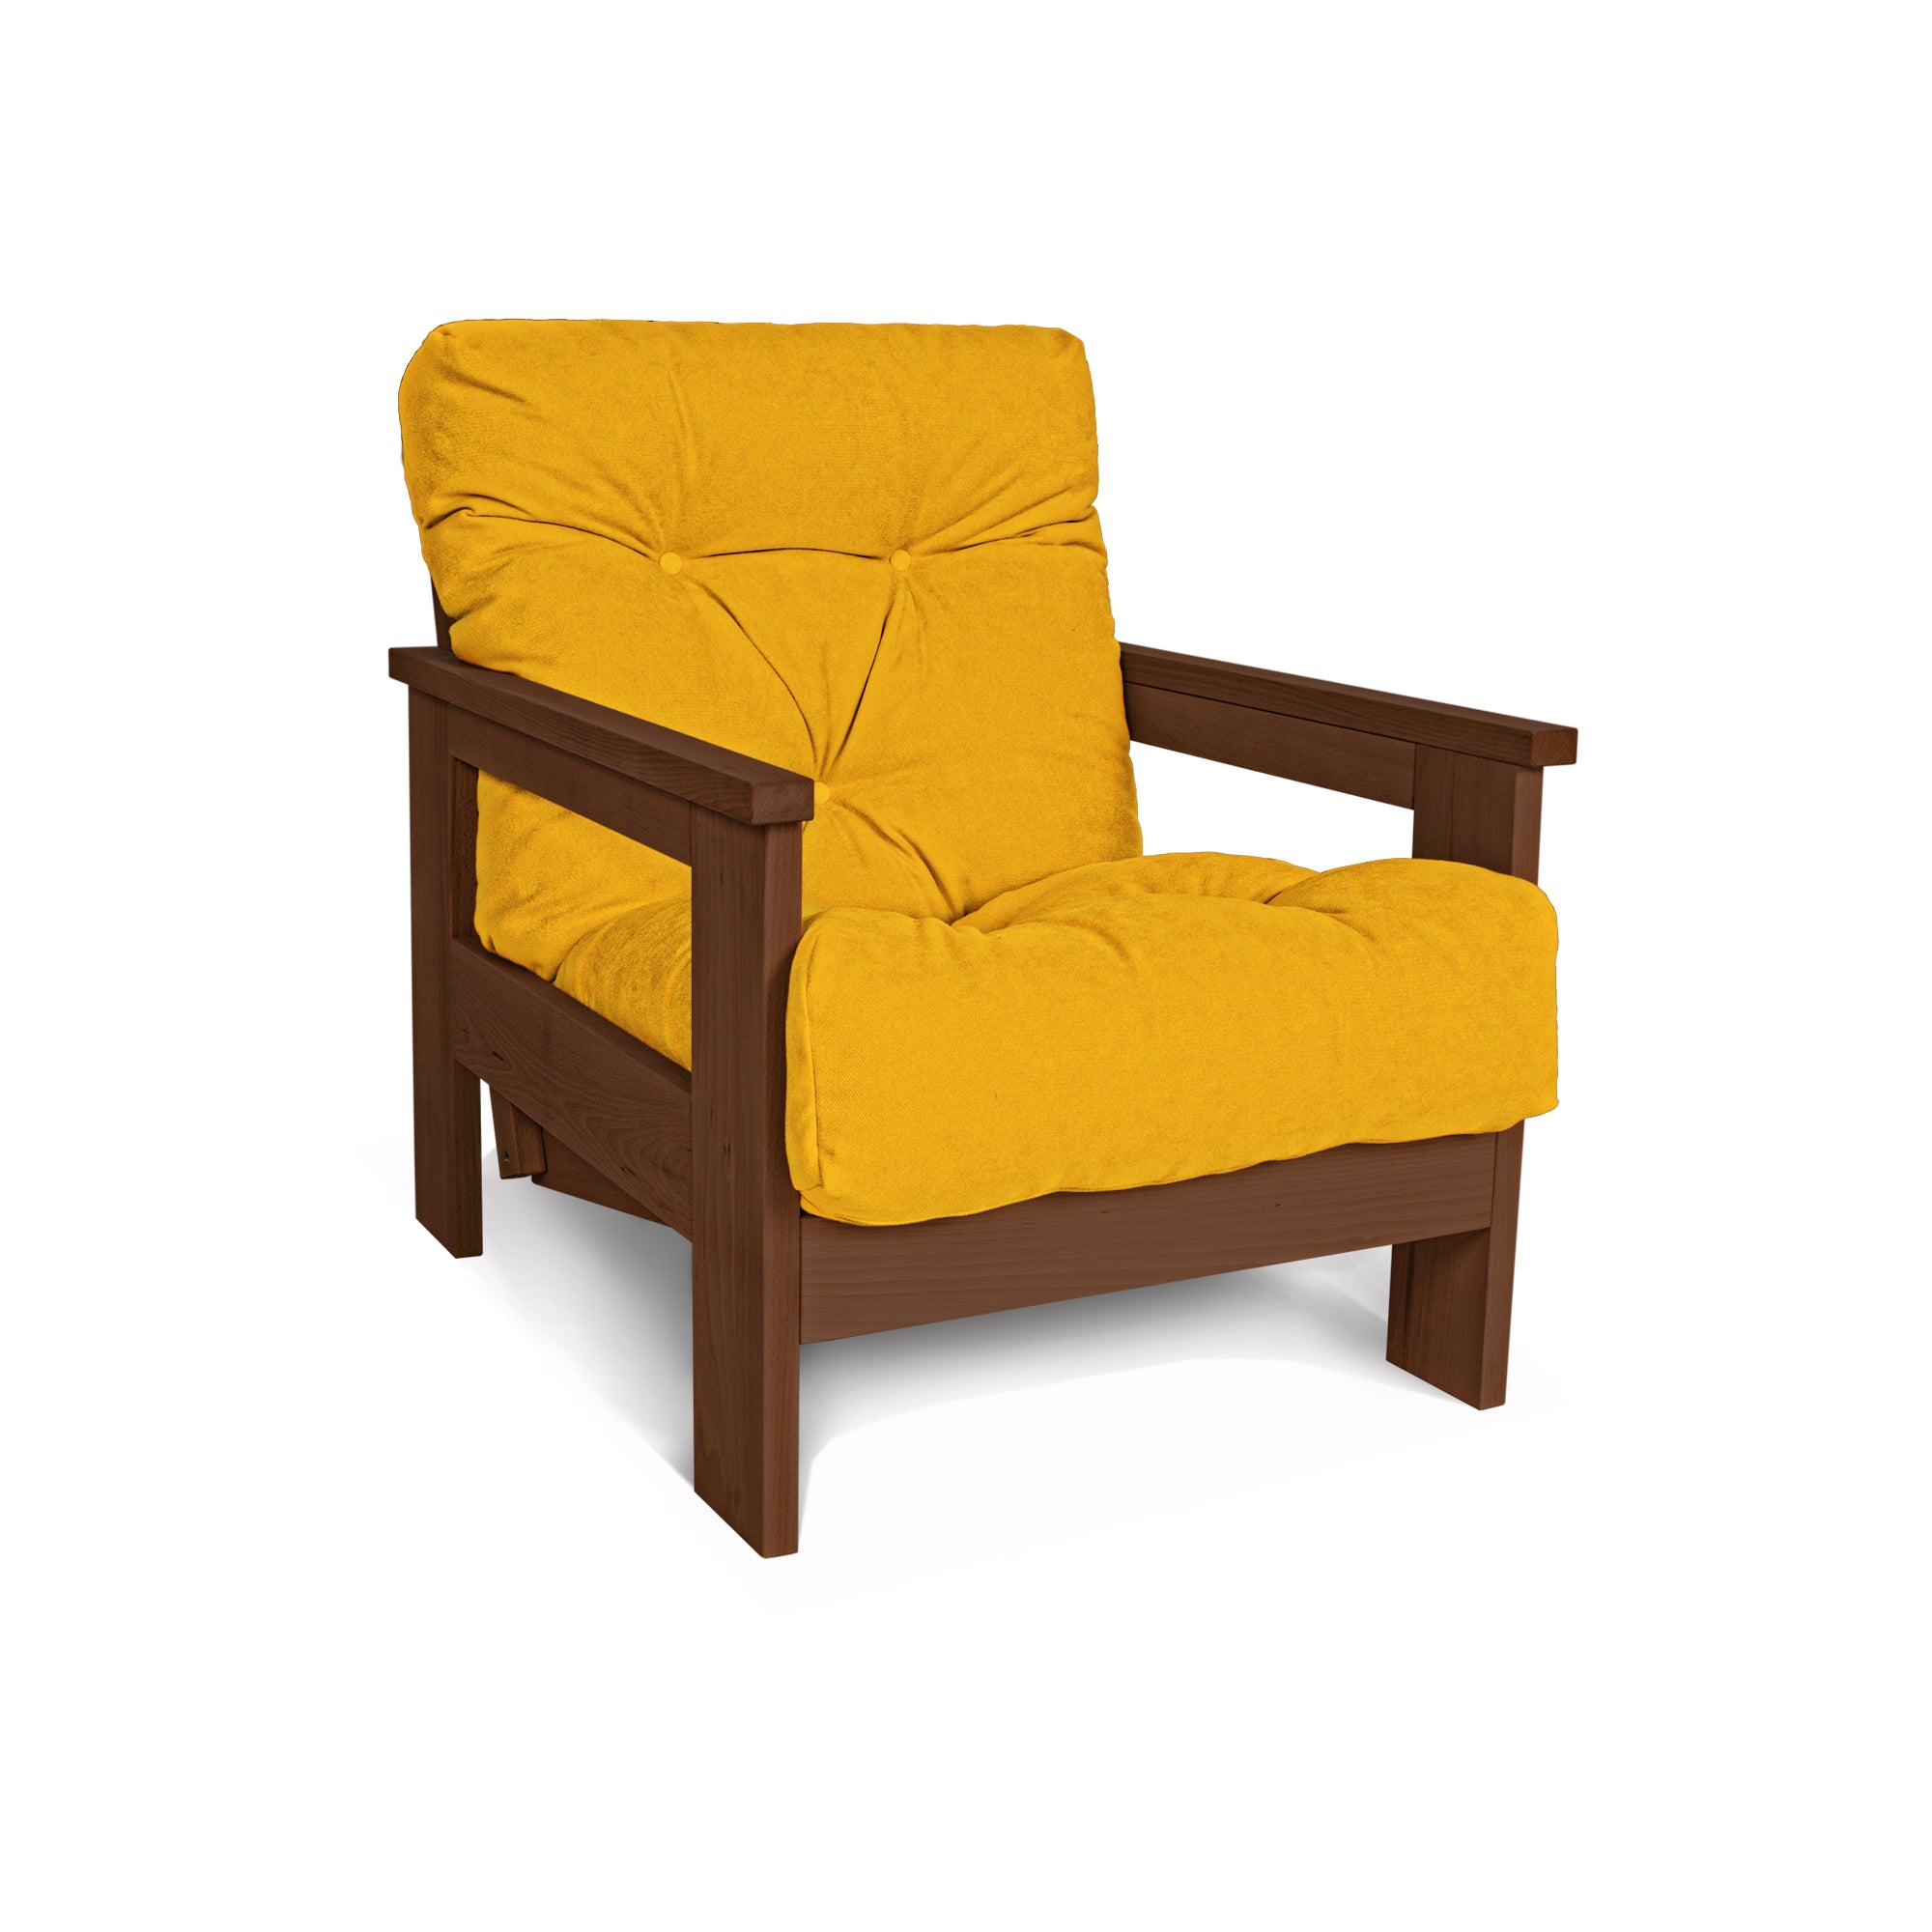 MEXICO Armchair, Beech Wood Frame, Walnut Colour-yellow fabric